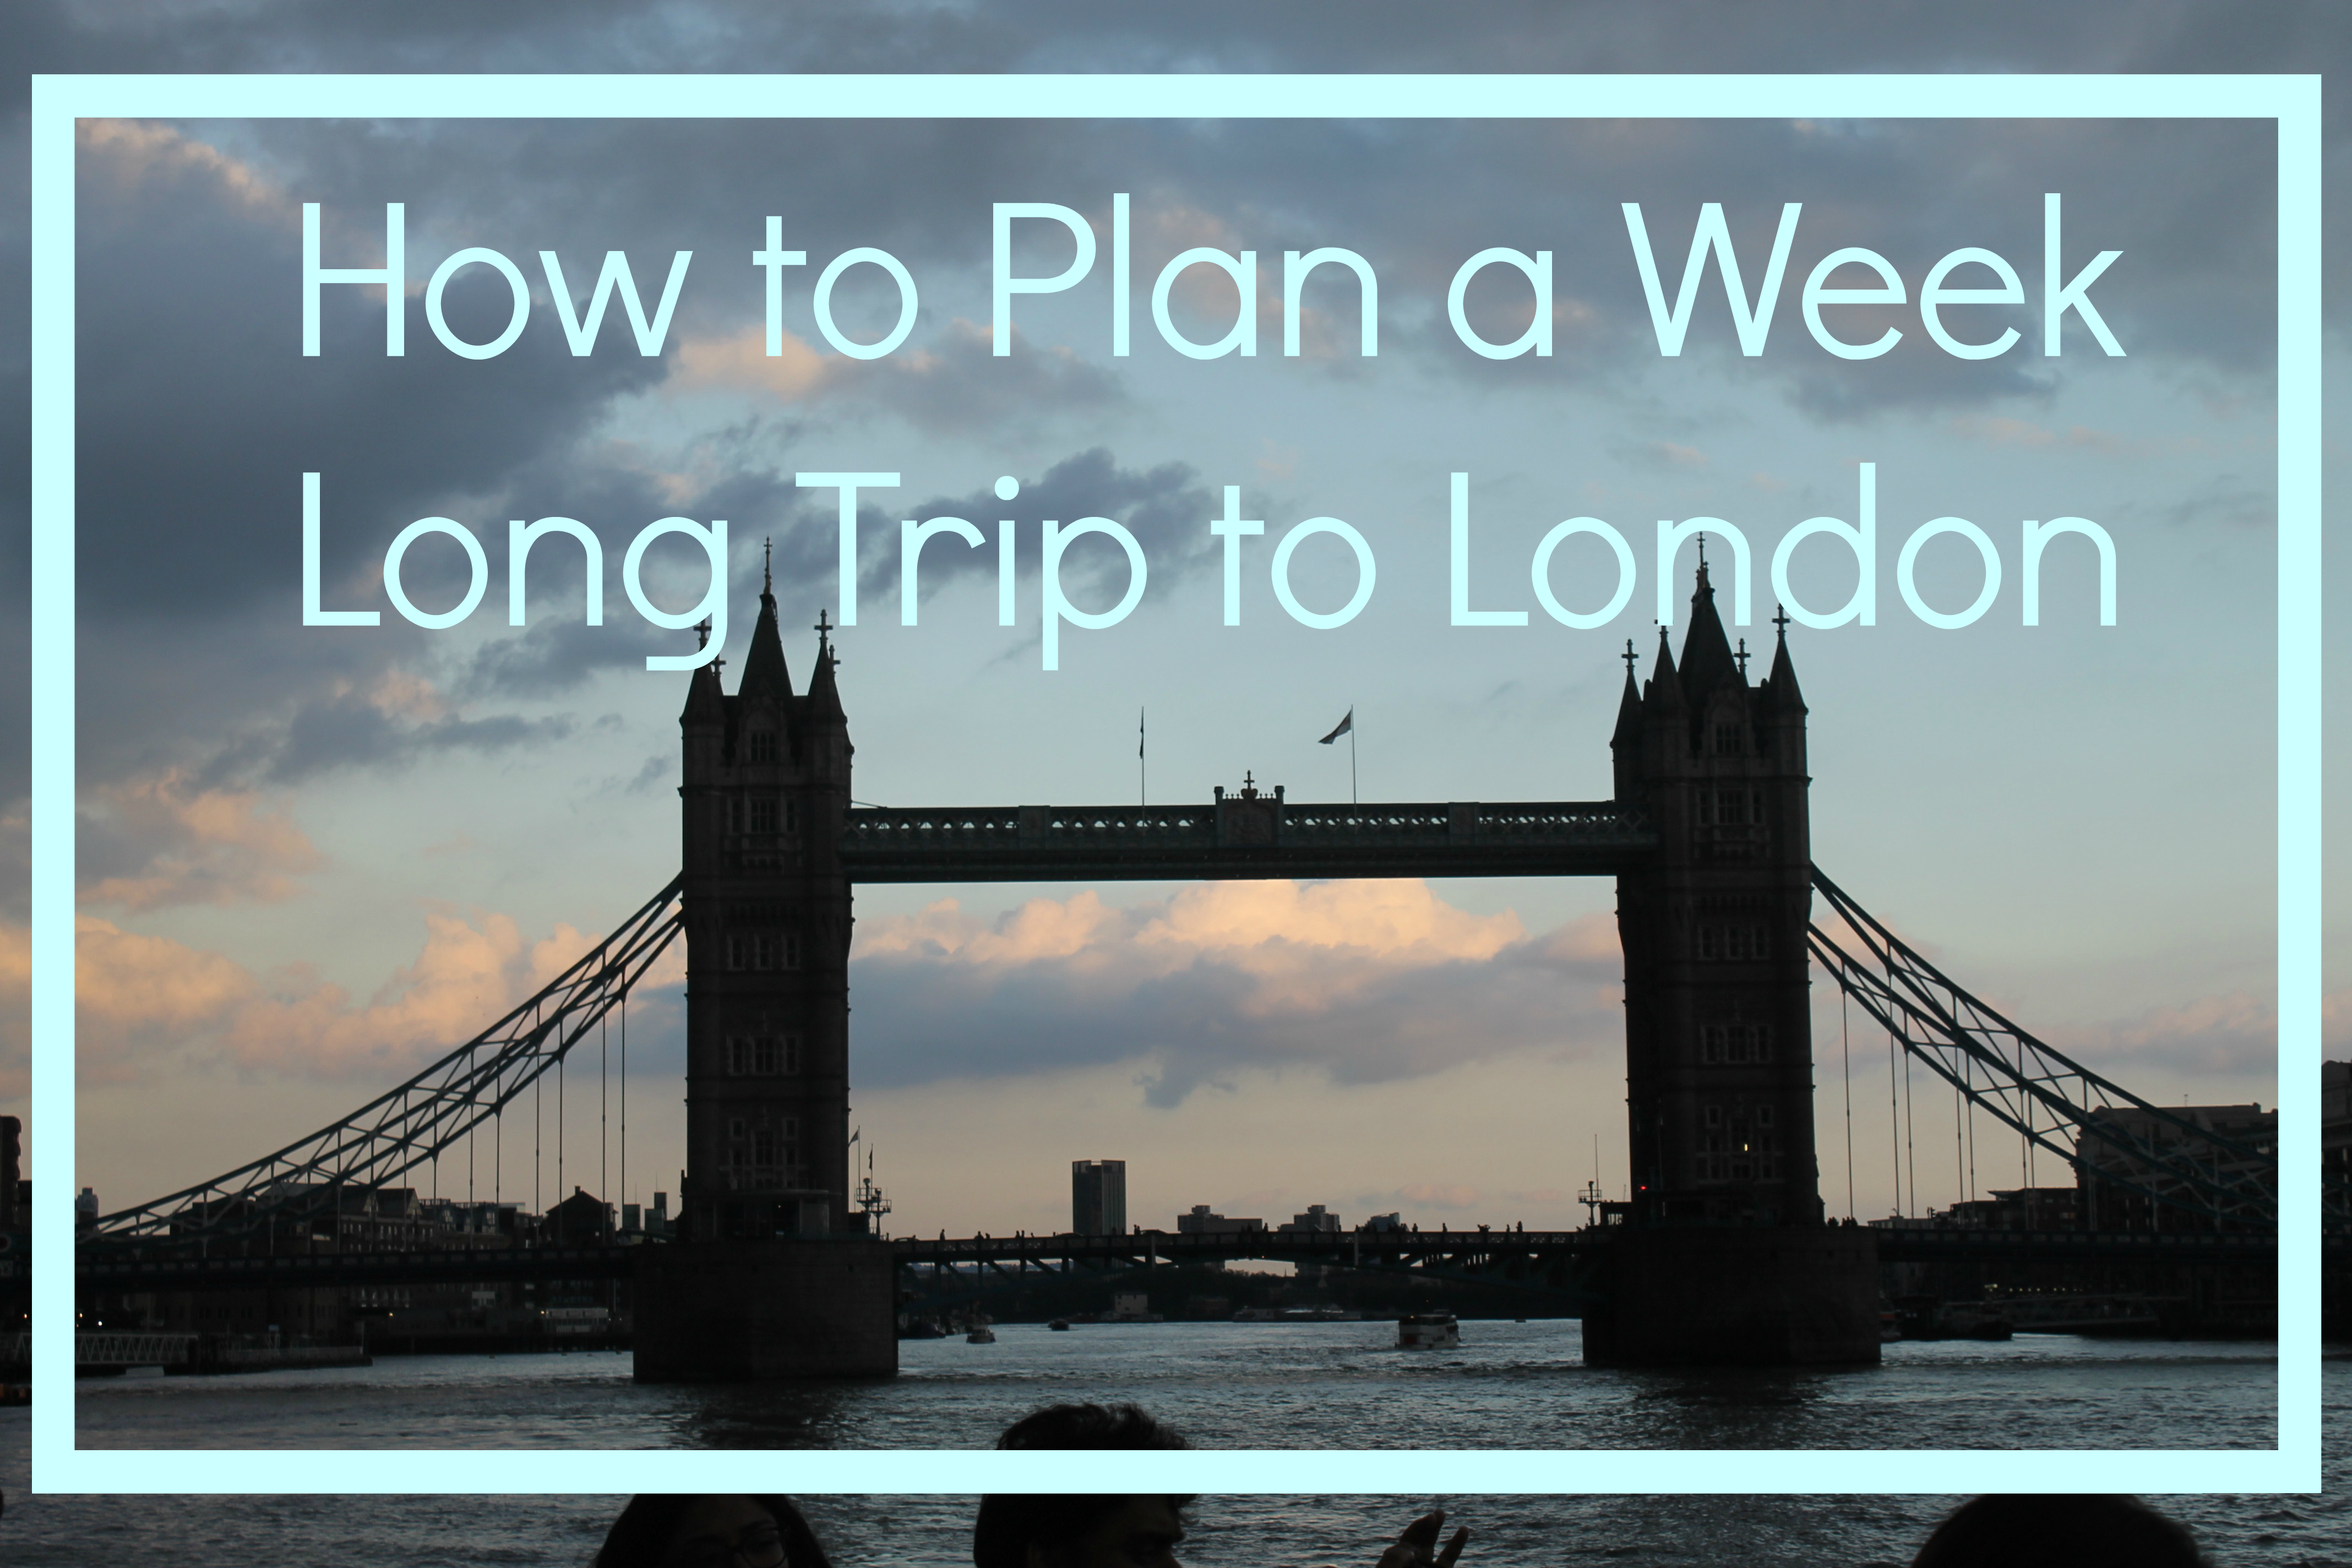 Jordan Taylor C - How to Plan a Week-Long Trip to London